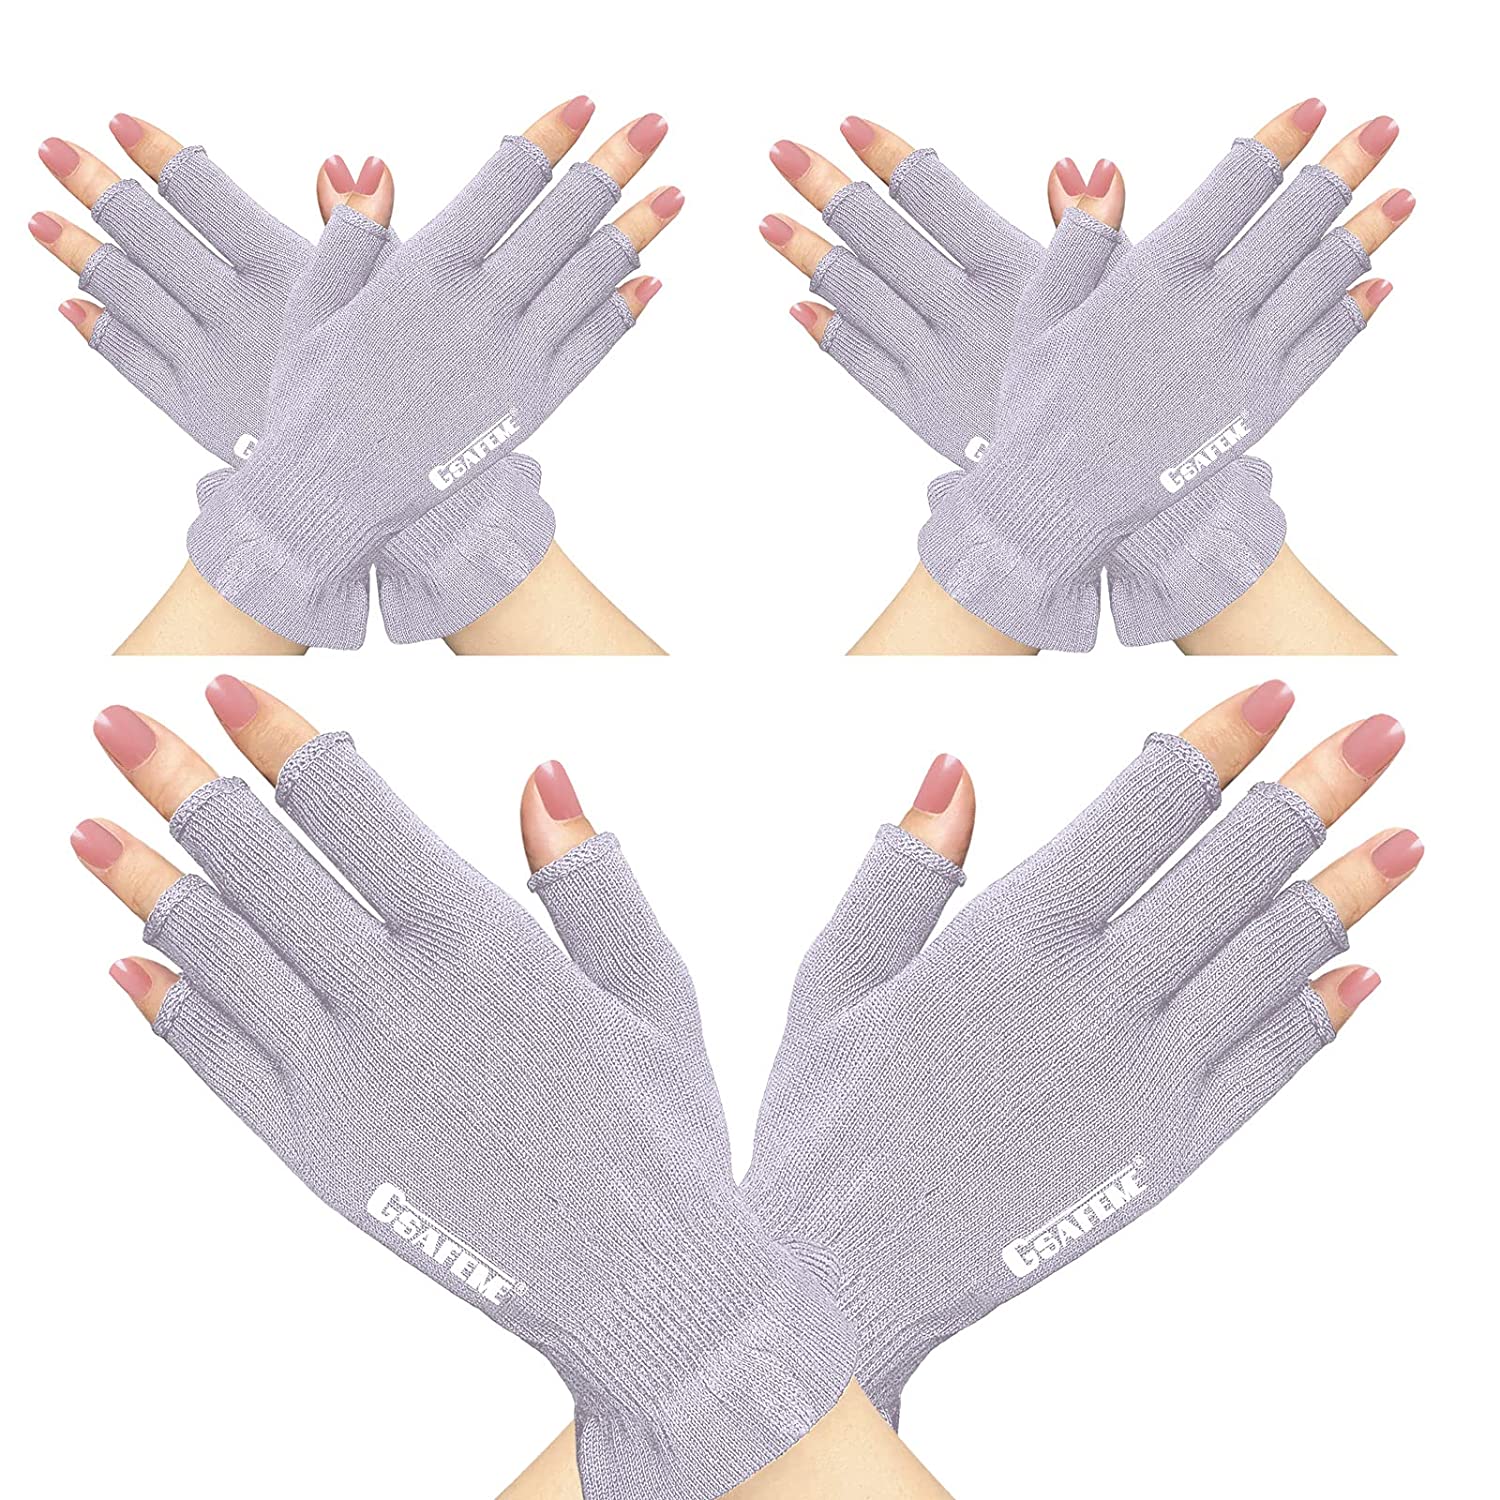 Fingerless Anti UV Radiation Protection Nail Gloves UV Protection